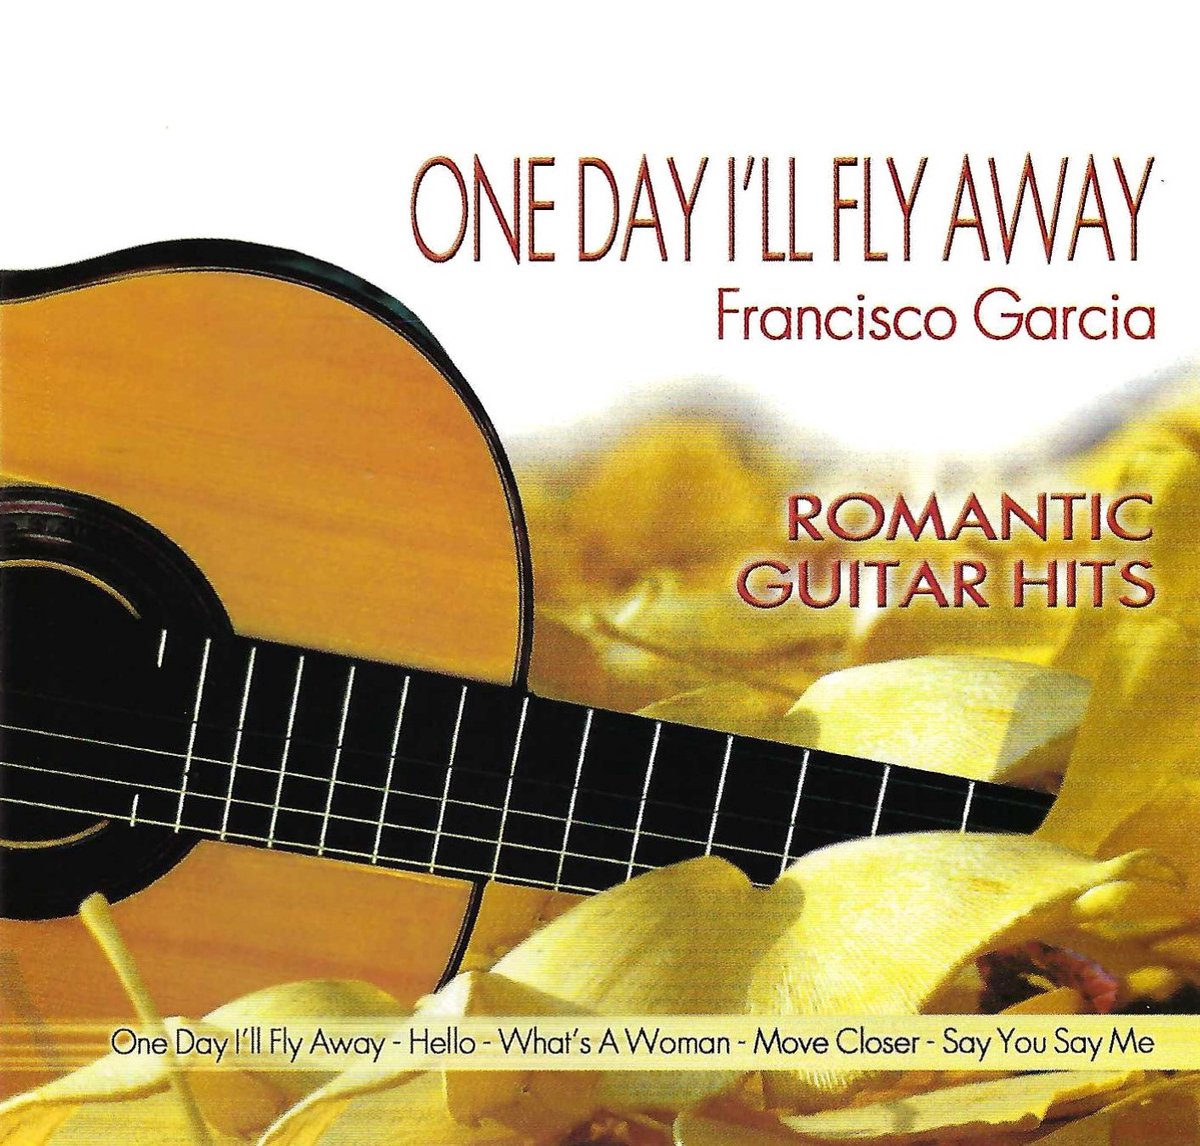 Francisco Garcia - Romantic Guitar Hits - One Day I'll Fly Away - Francisco Garcia